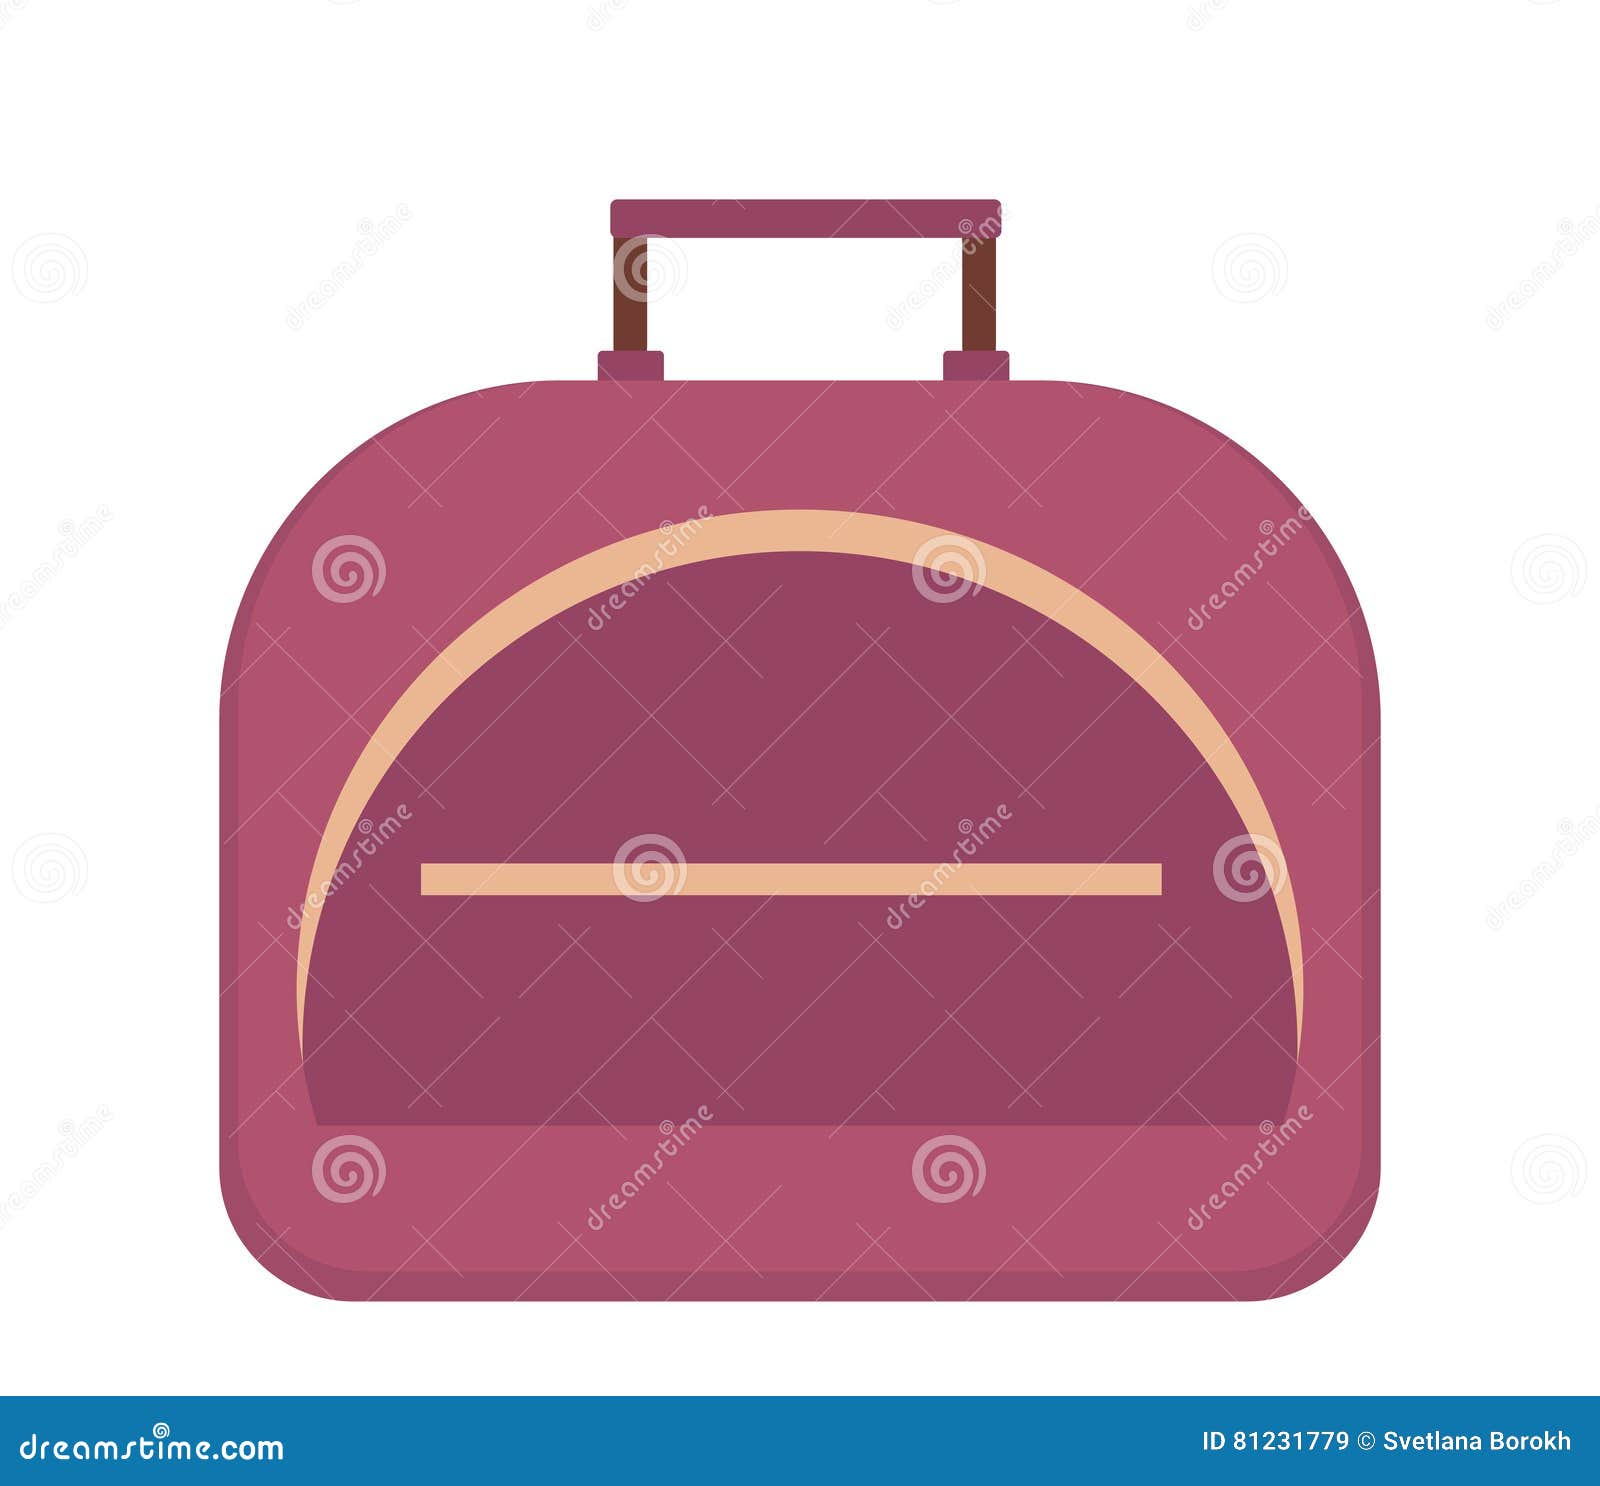 Sports bag icon flat style. Gym bag isolated on white background. Vector illustration